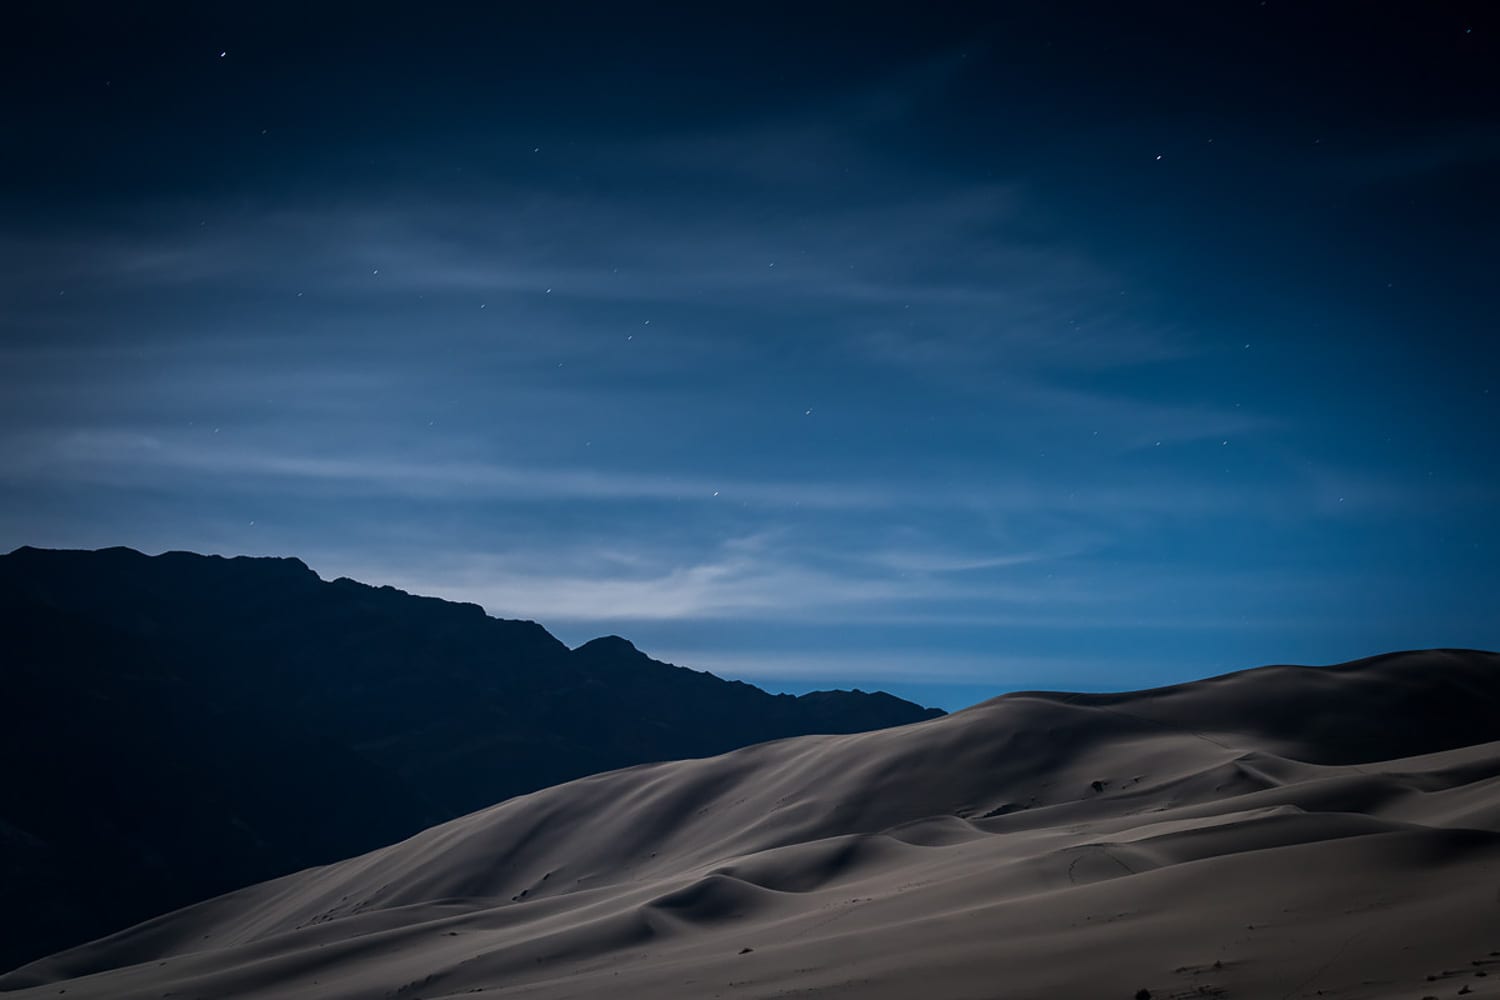 Death Valley Sand Dunes Photography. Photo © Michael E. Gordon